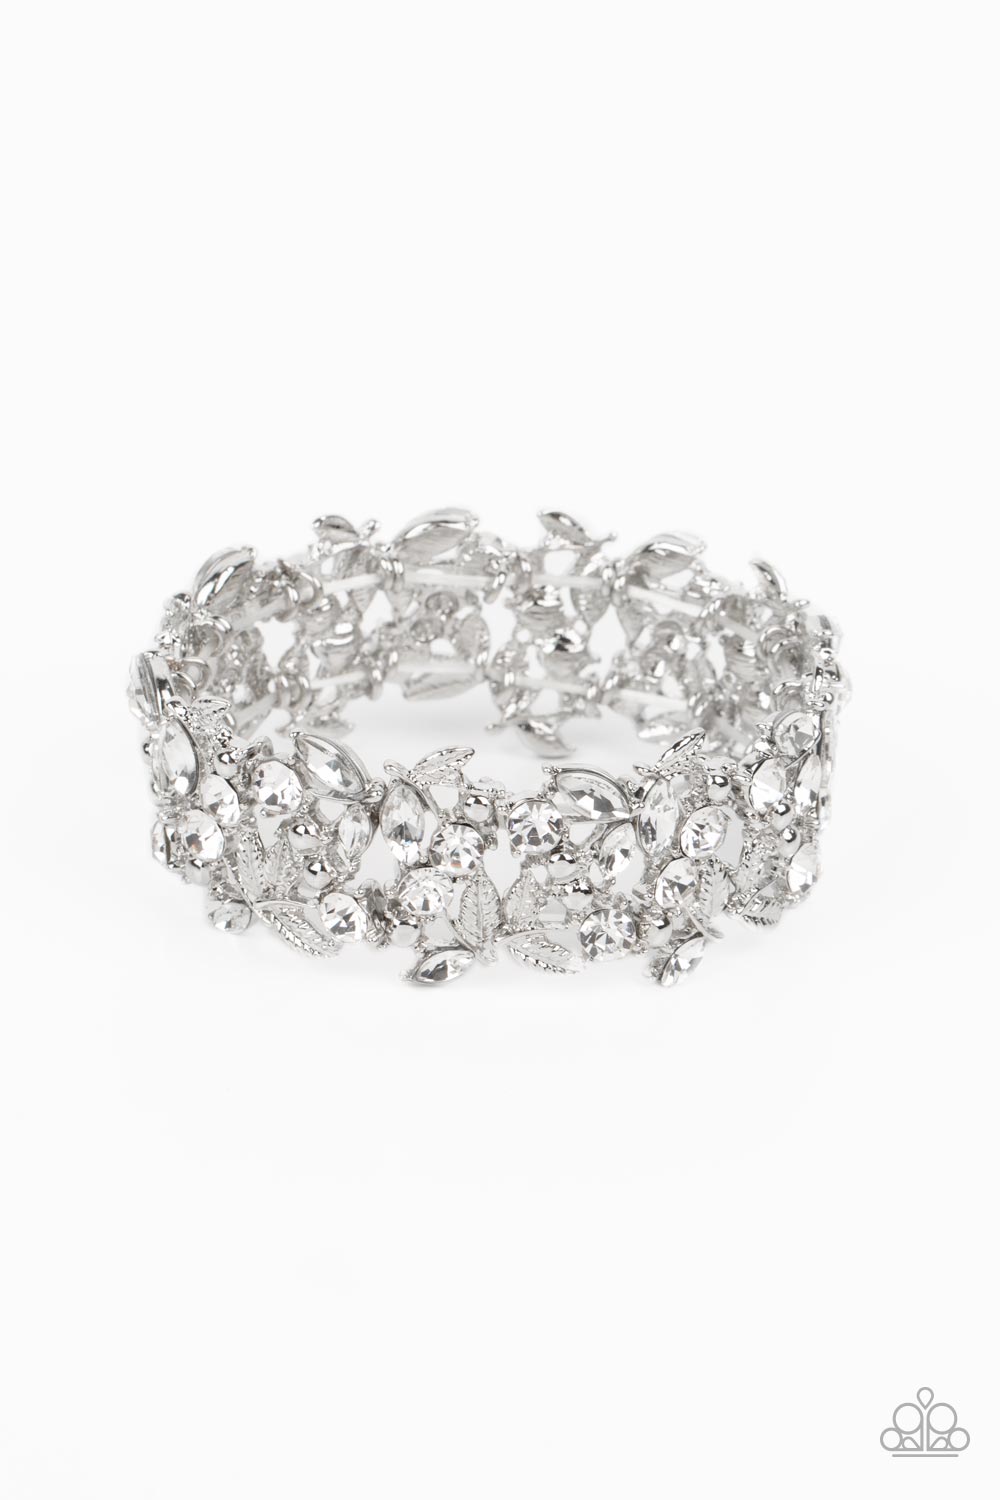 Feathered Finesse White Rhinestone Bracelet - Paparazzi Accessories- lightbox - CarasShop.com - $5 Jewelry by Cara Jewels